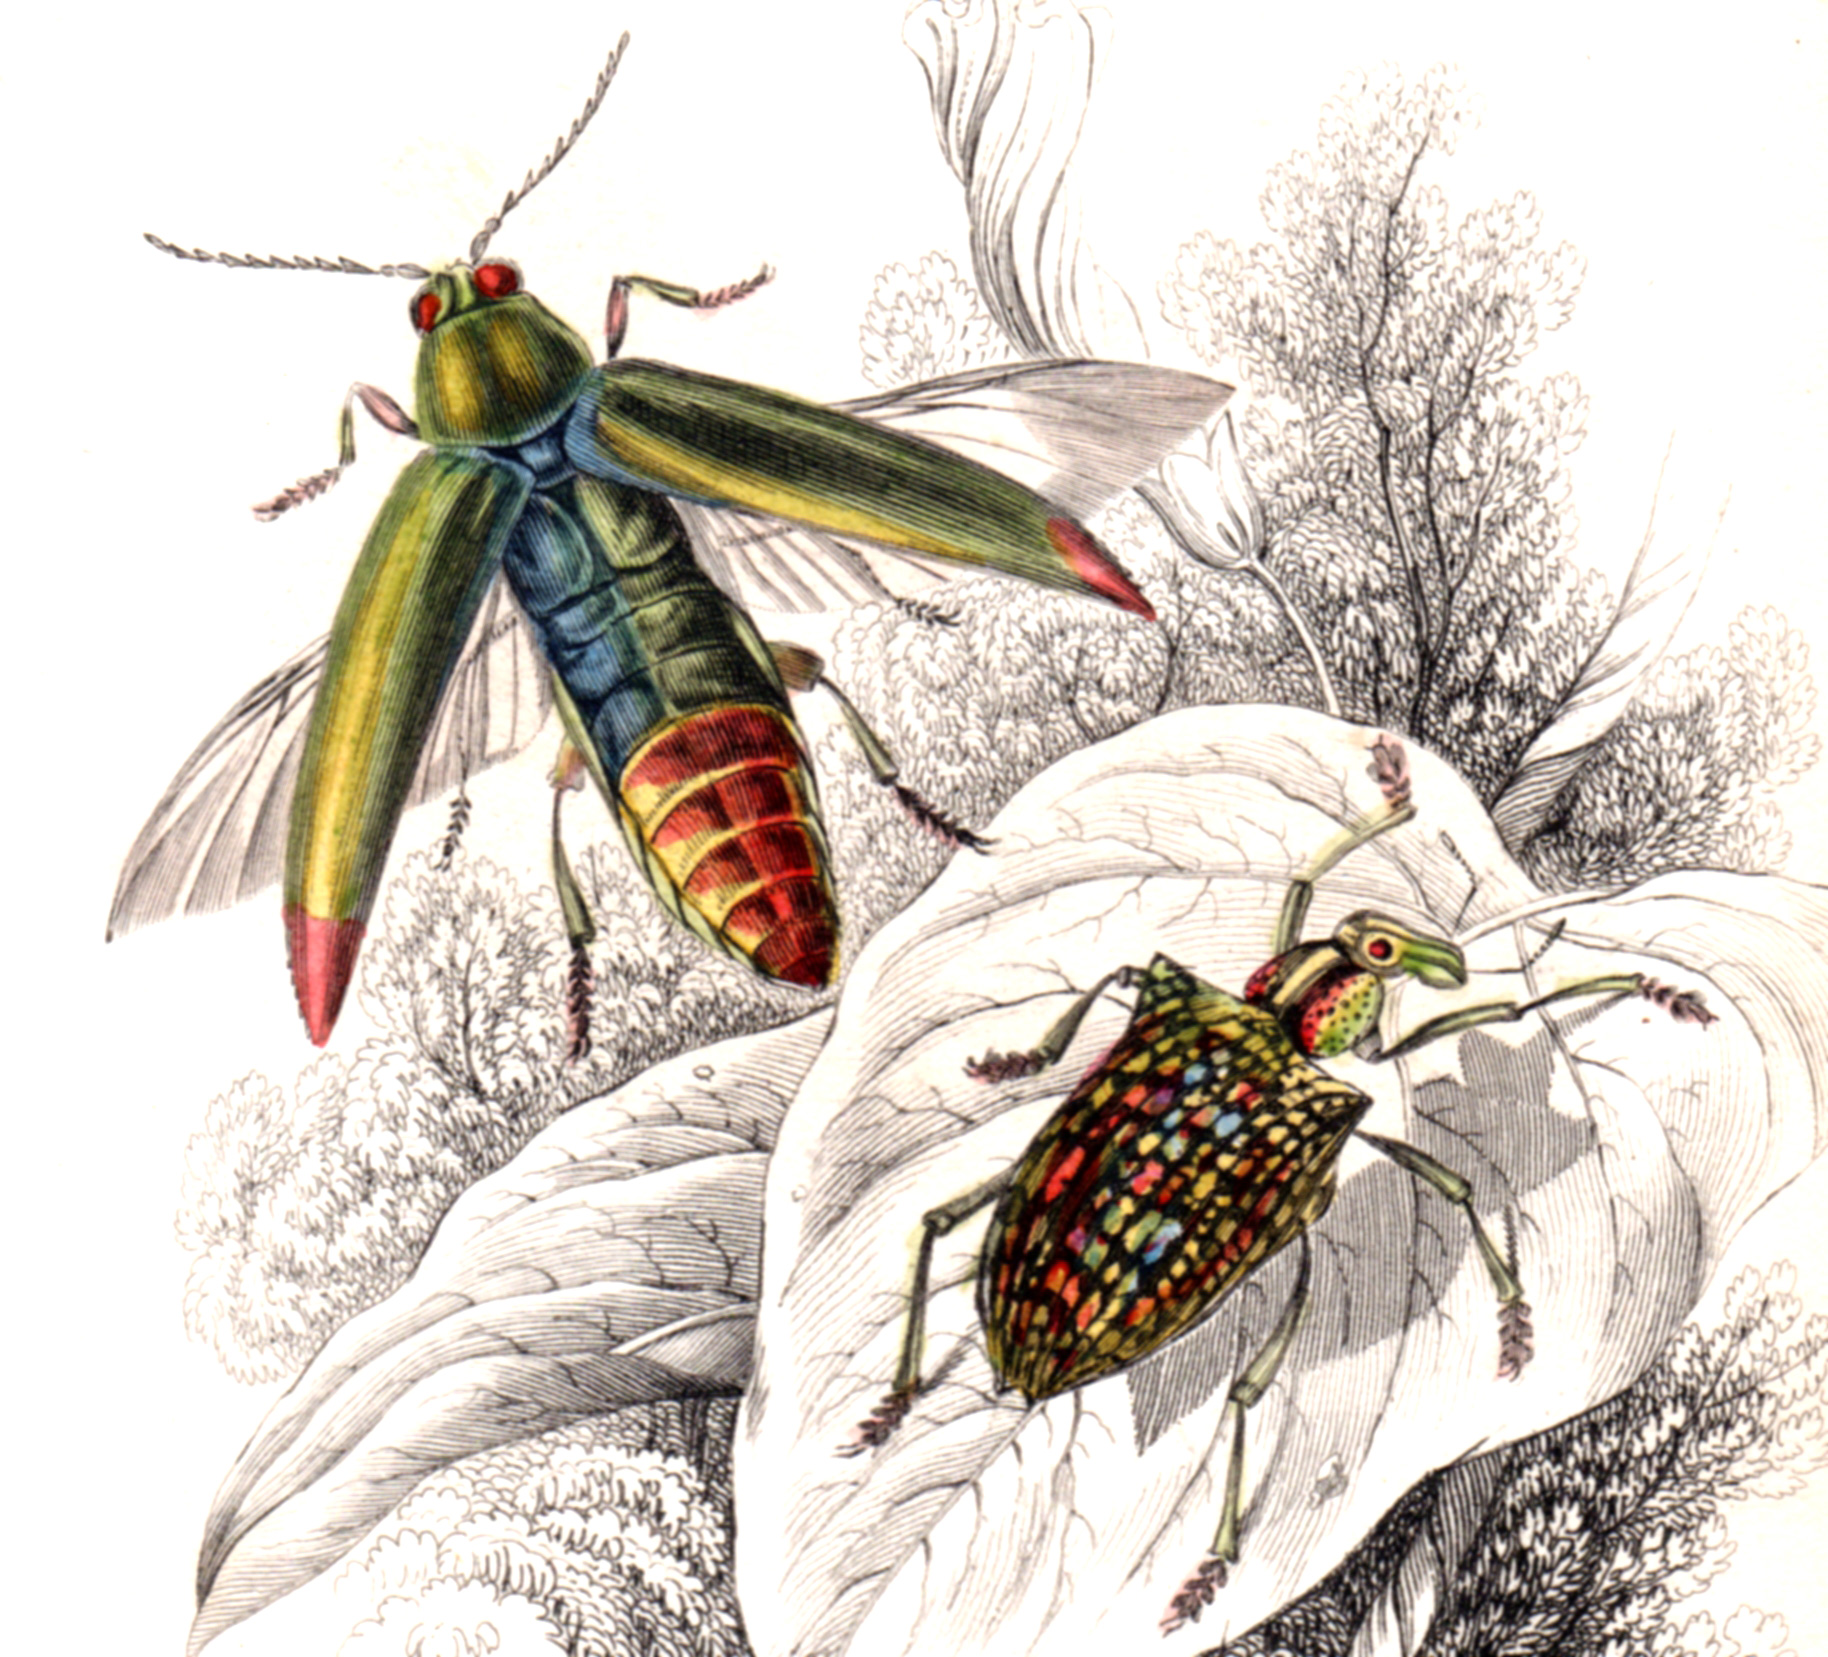 Jardine, Sir Wm / Lizars, Wm – Beetles, Insects